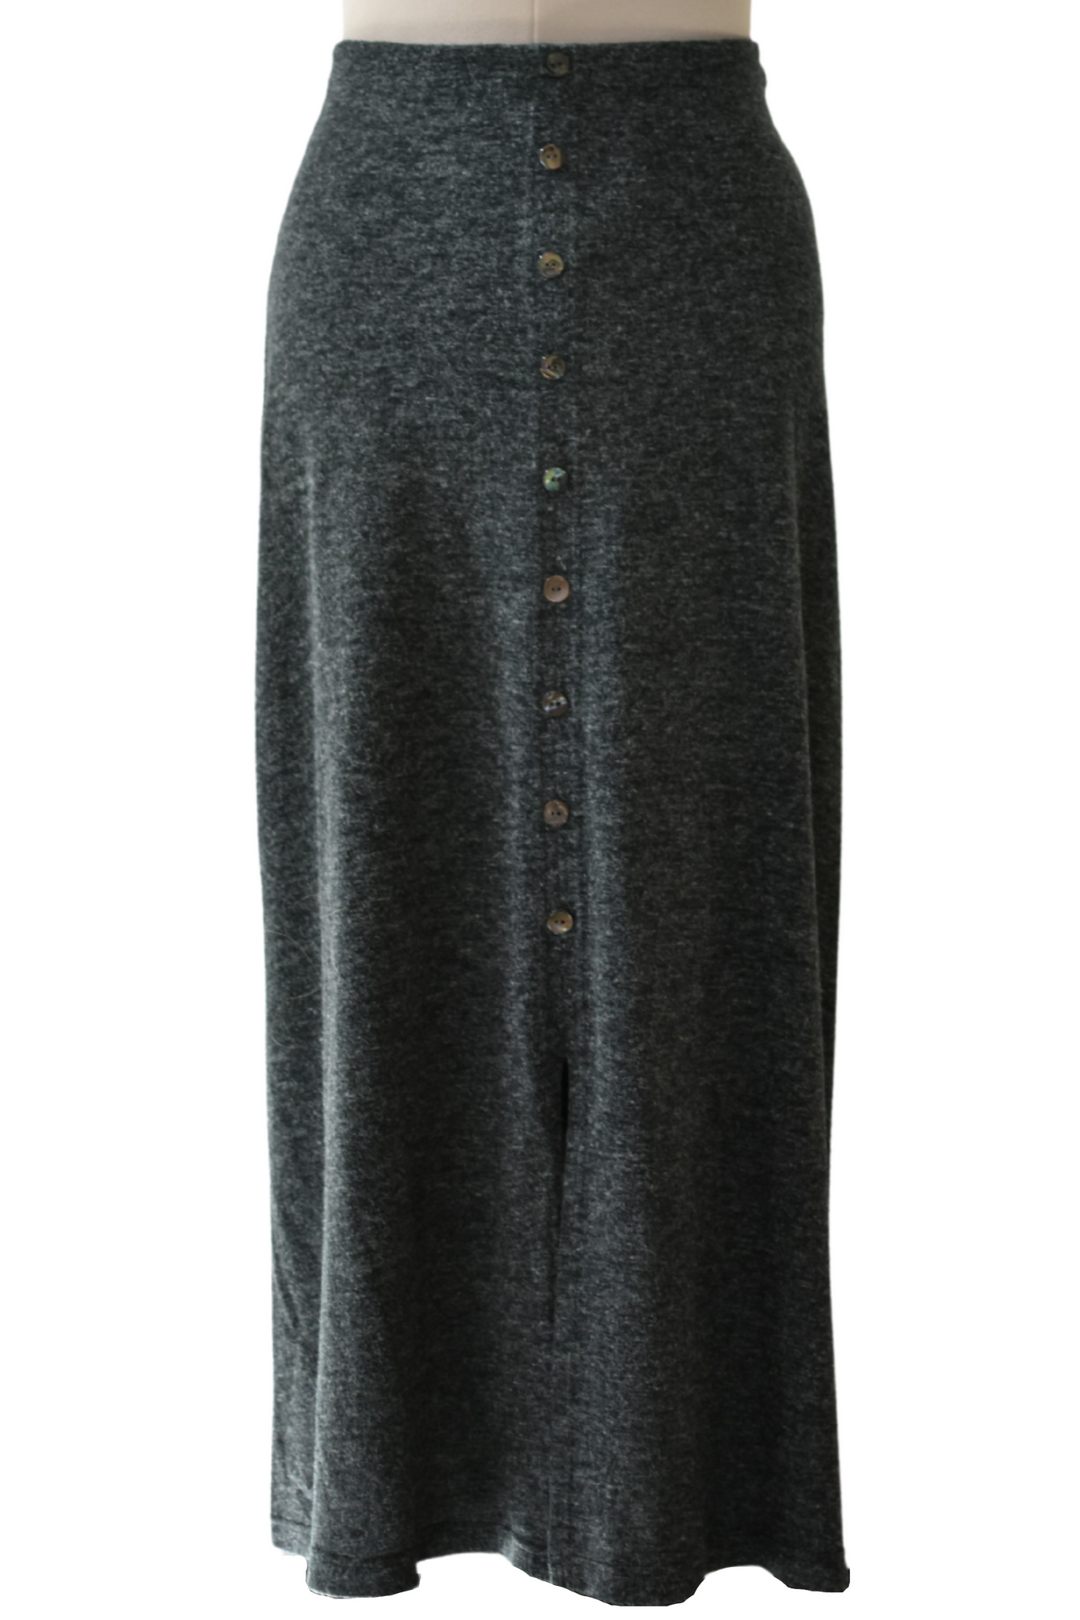 Grey Long Skirt